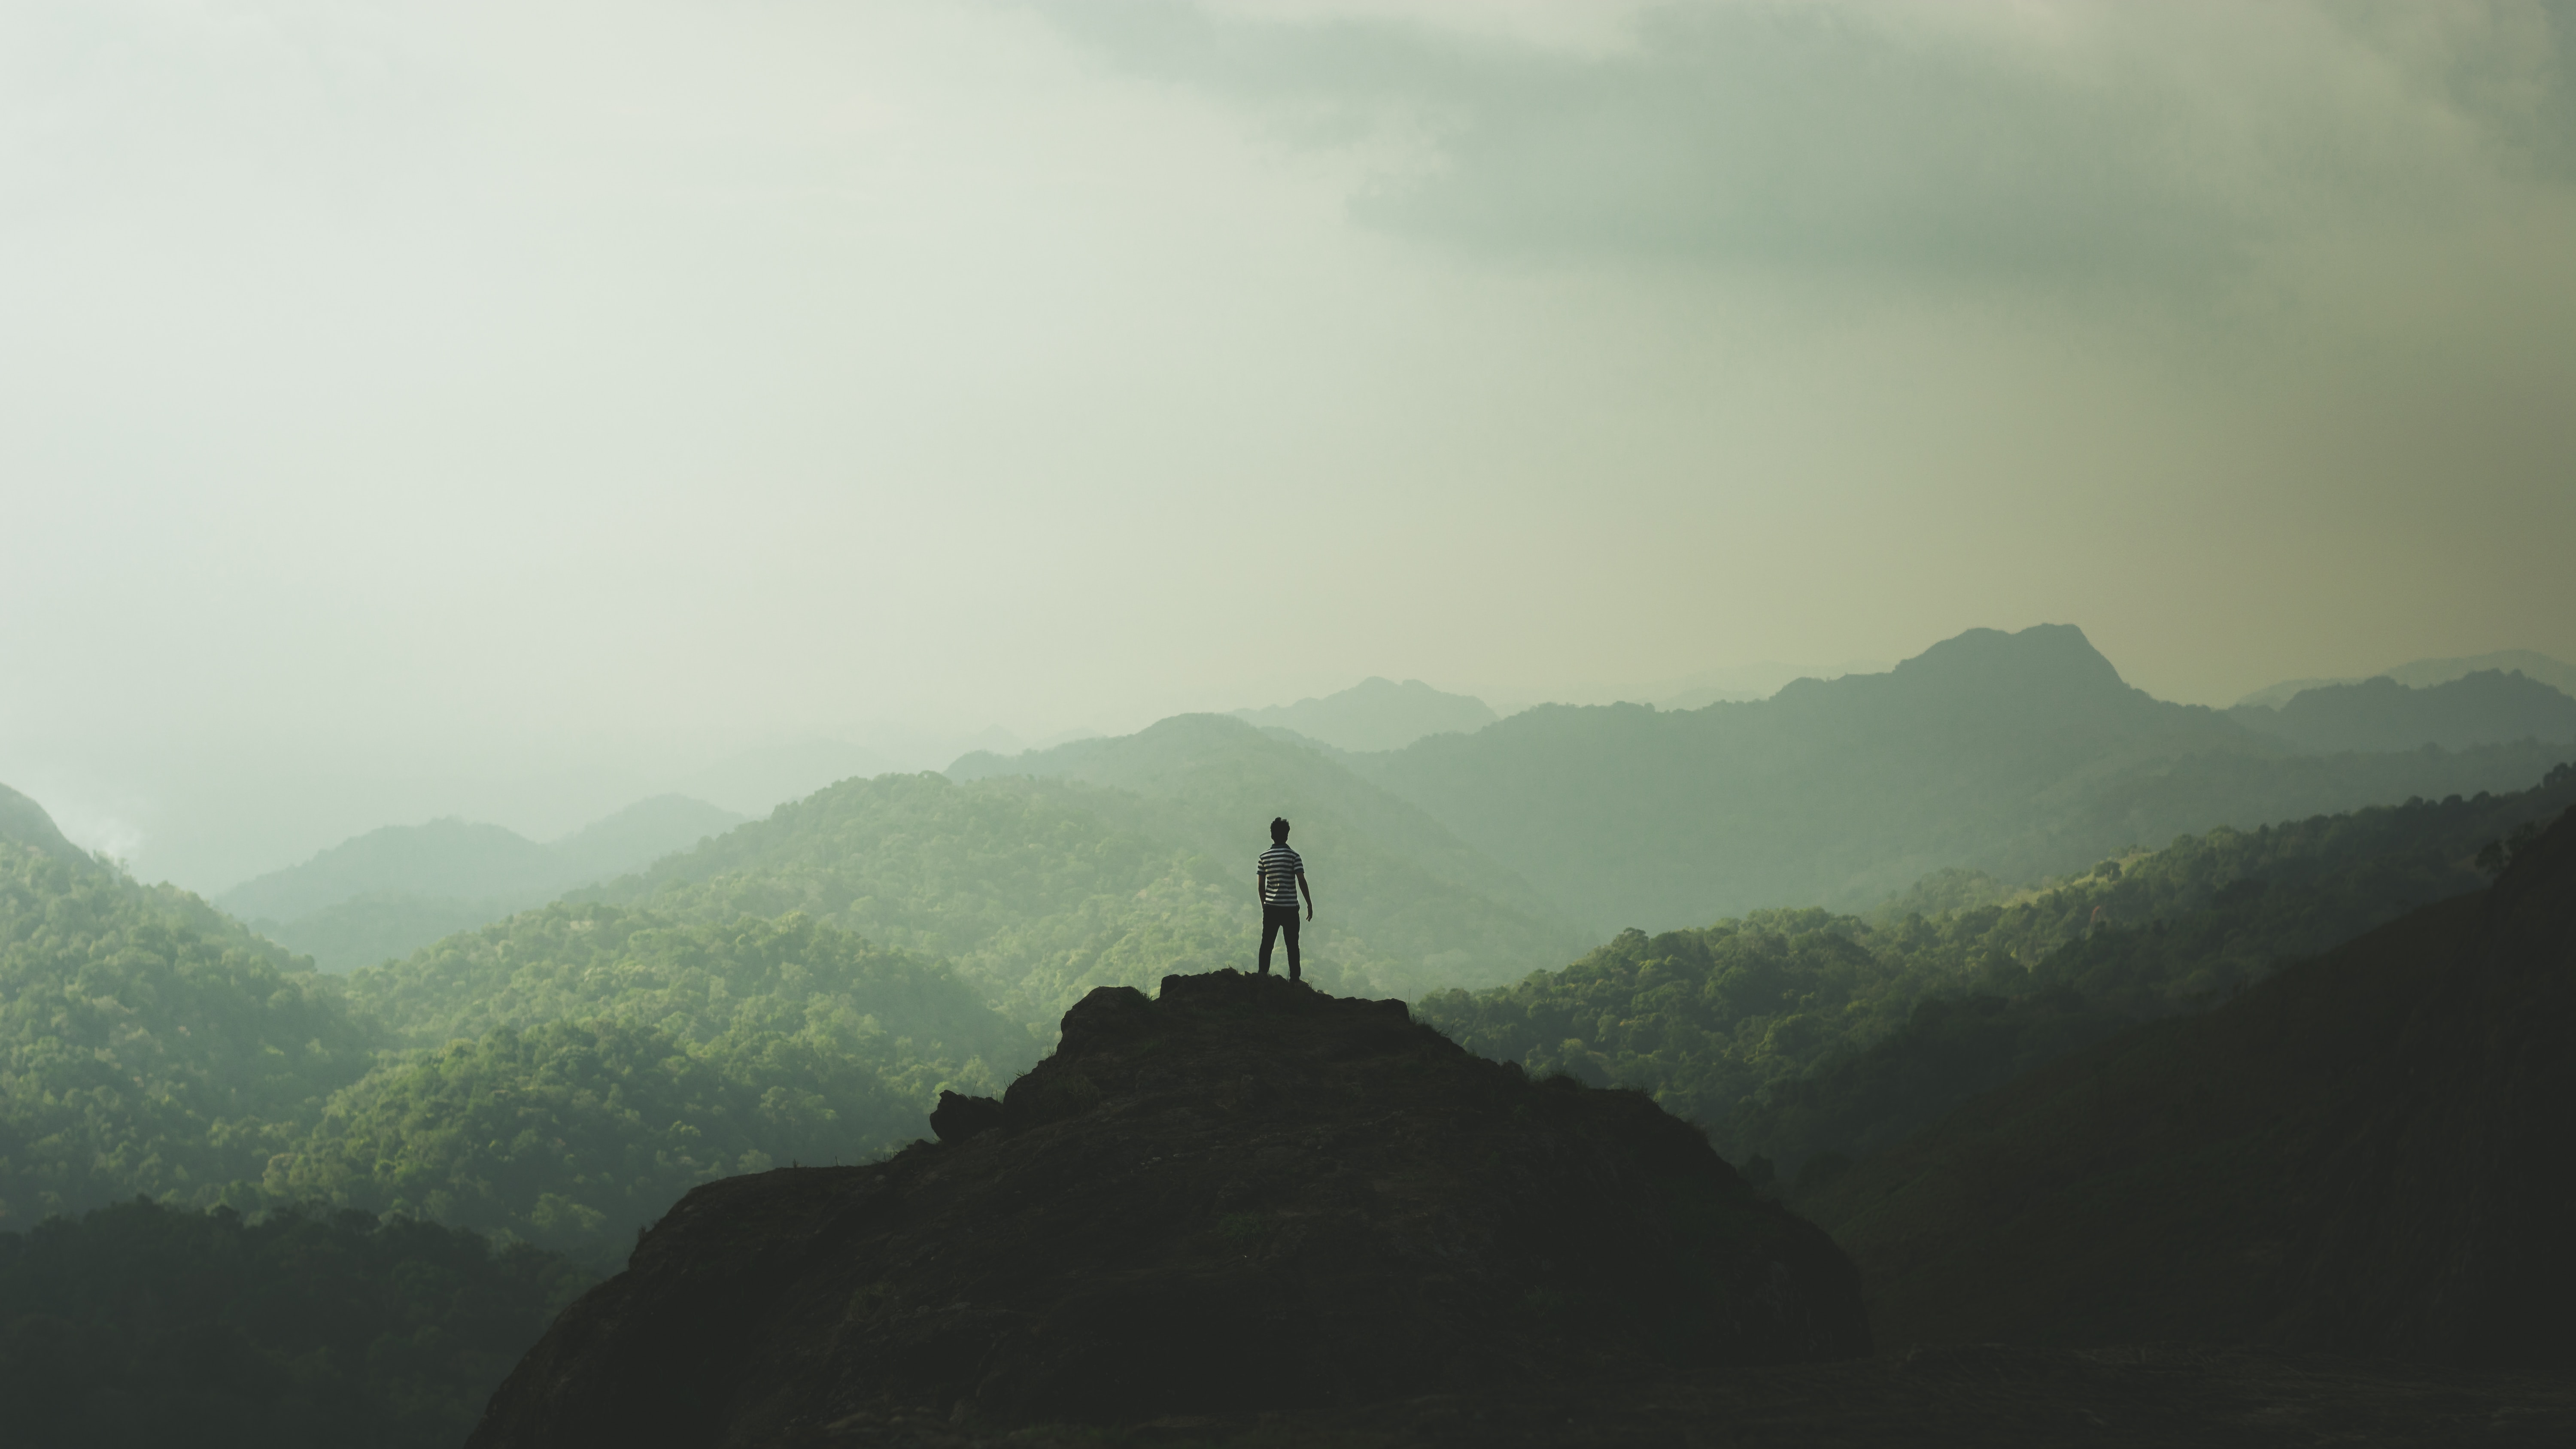 man on mountain photo by alfred-aloushy